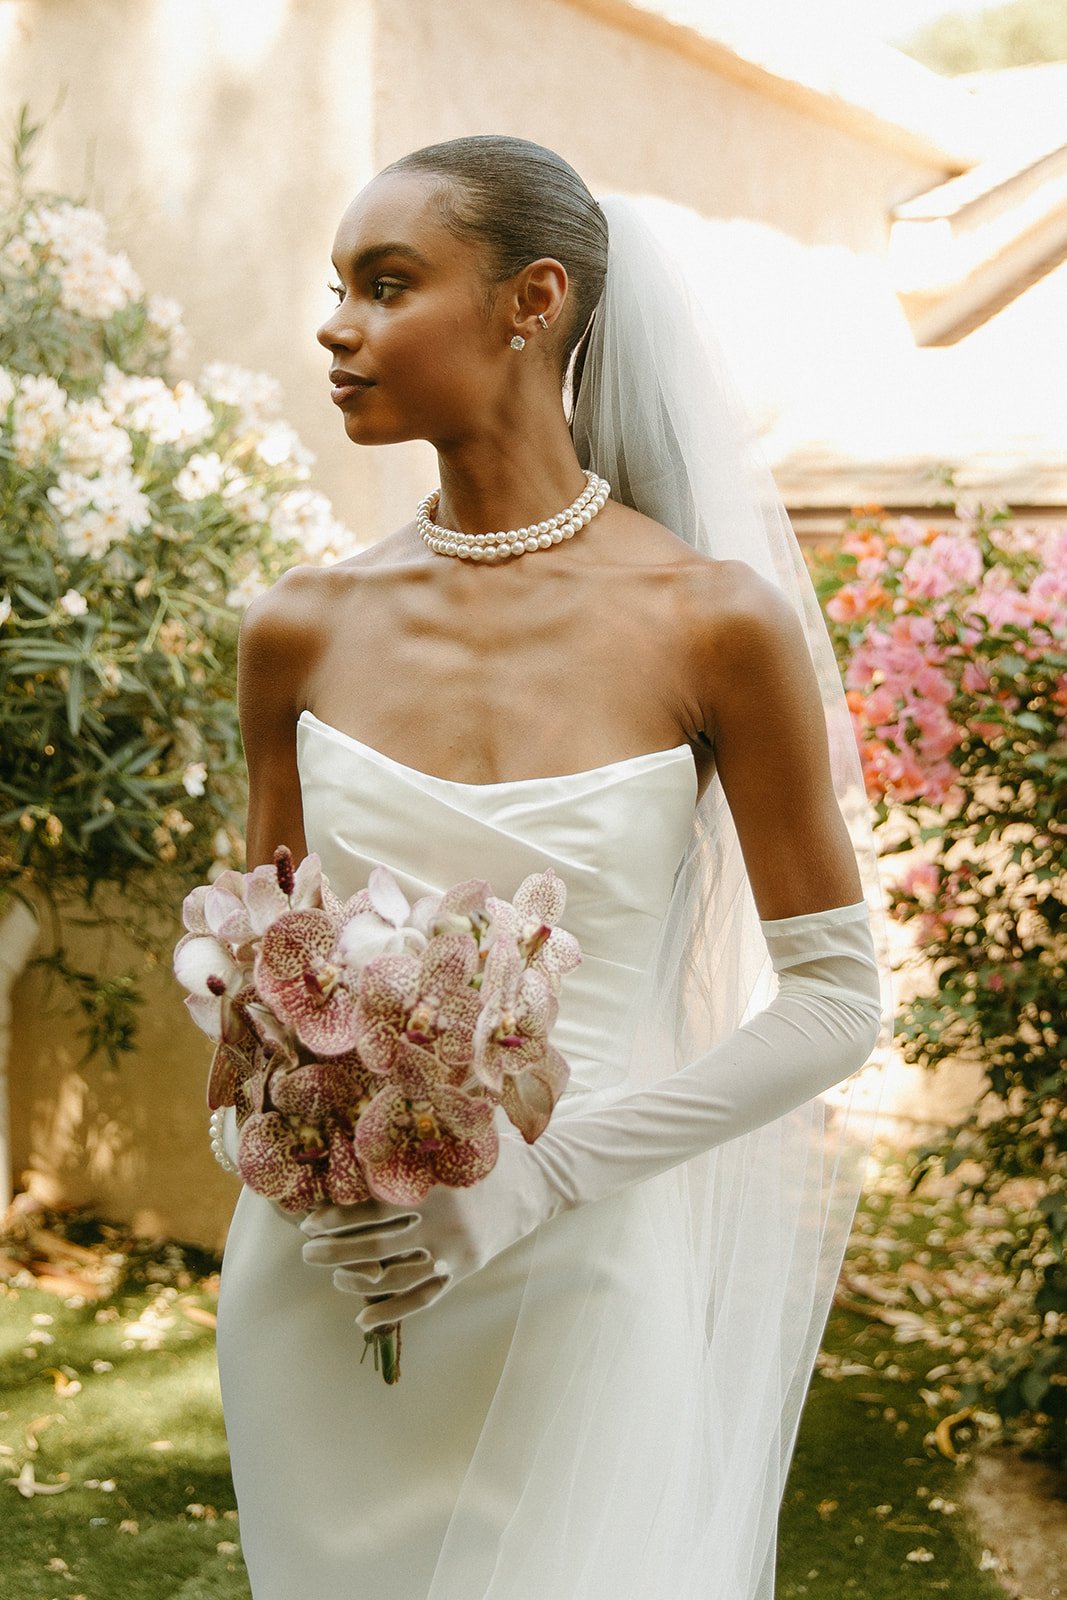 Luxury bride in an elegant wedding dress